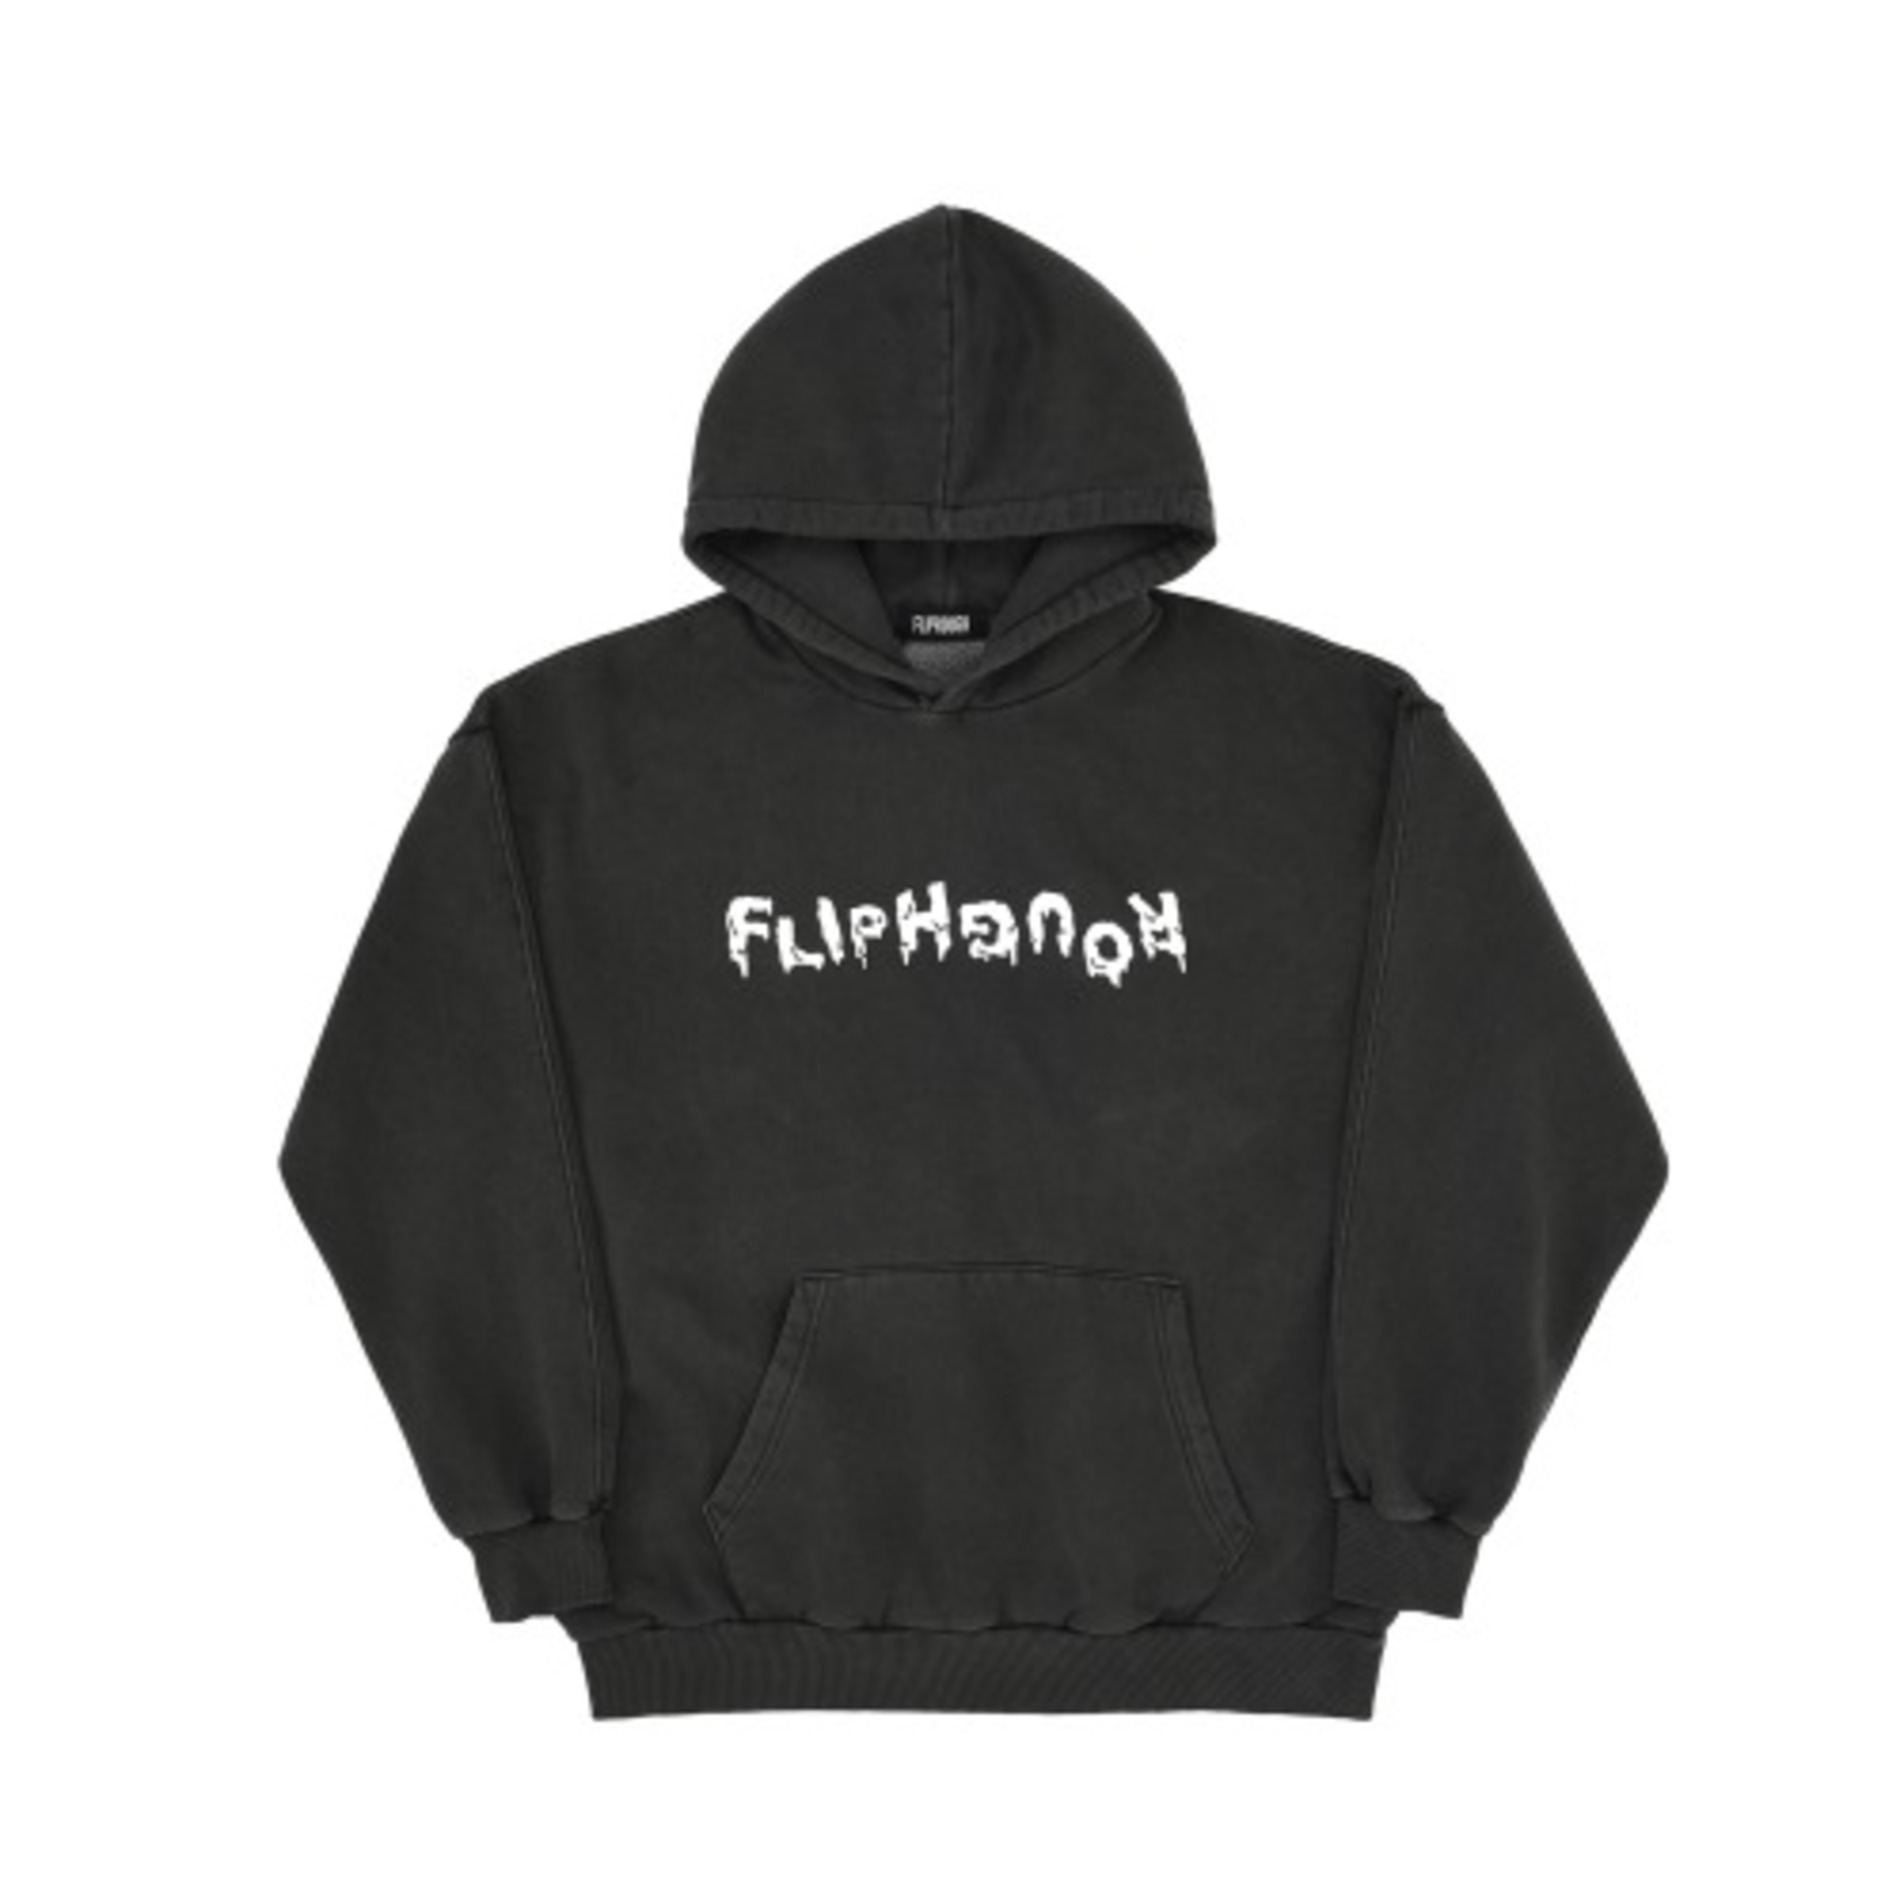 FLIPROUGH snow logo hoodie - Dark gray